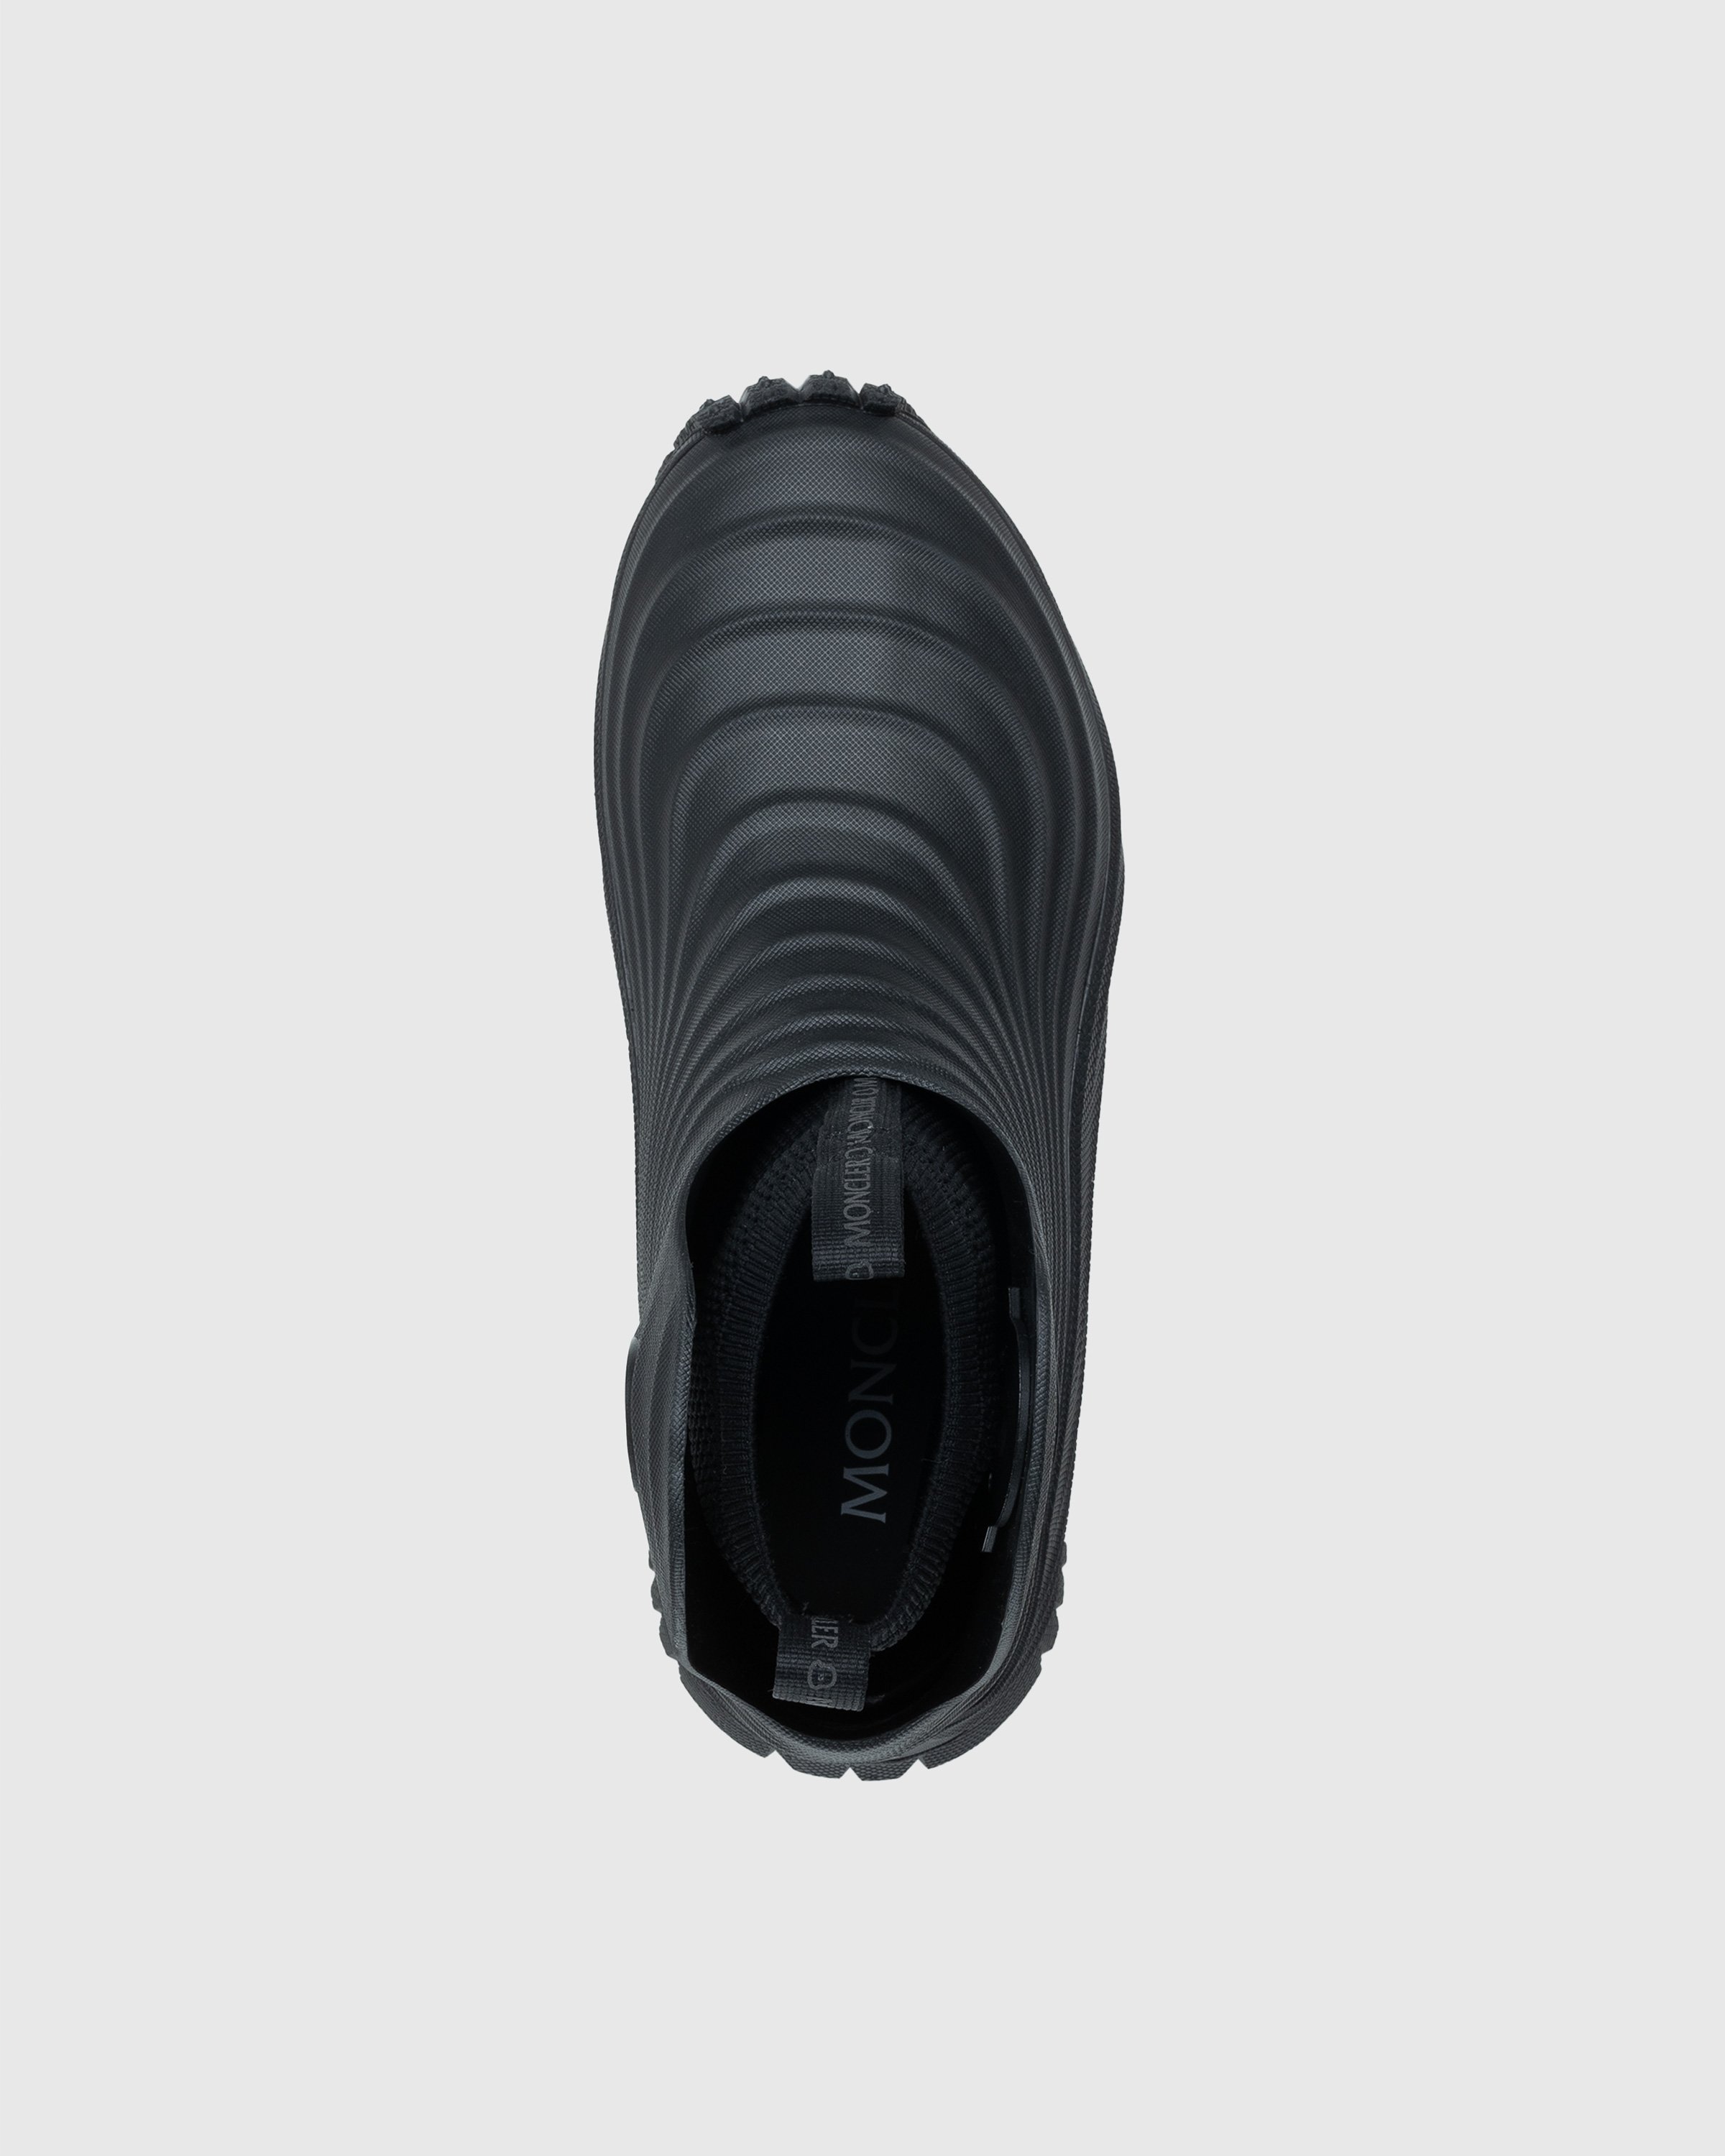 Moncler - Acqua High Rain Boots Black - Footwear - Black - Image 5